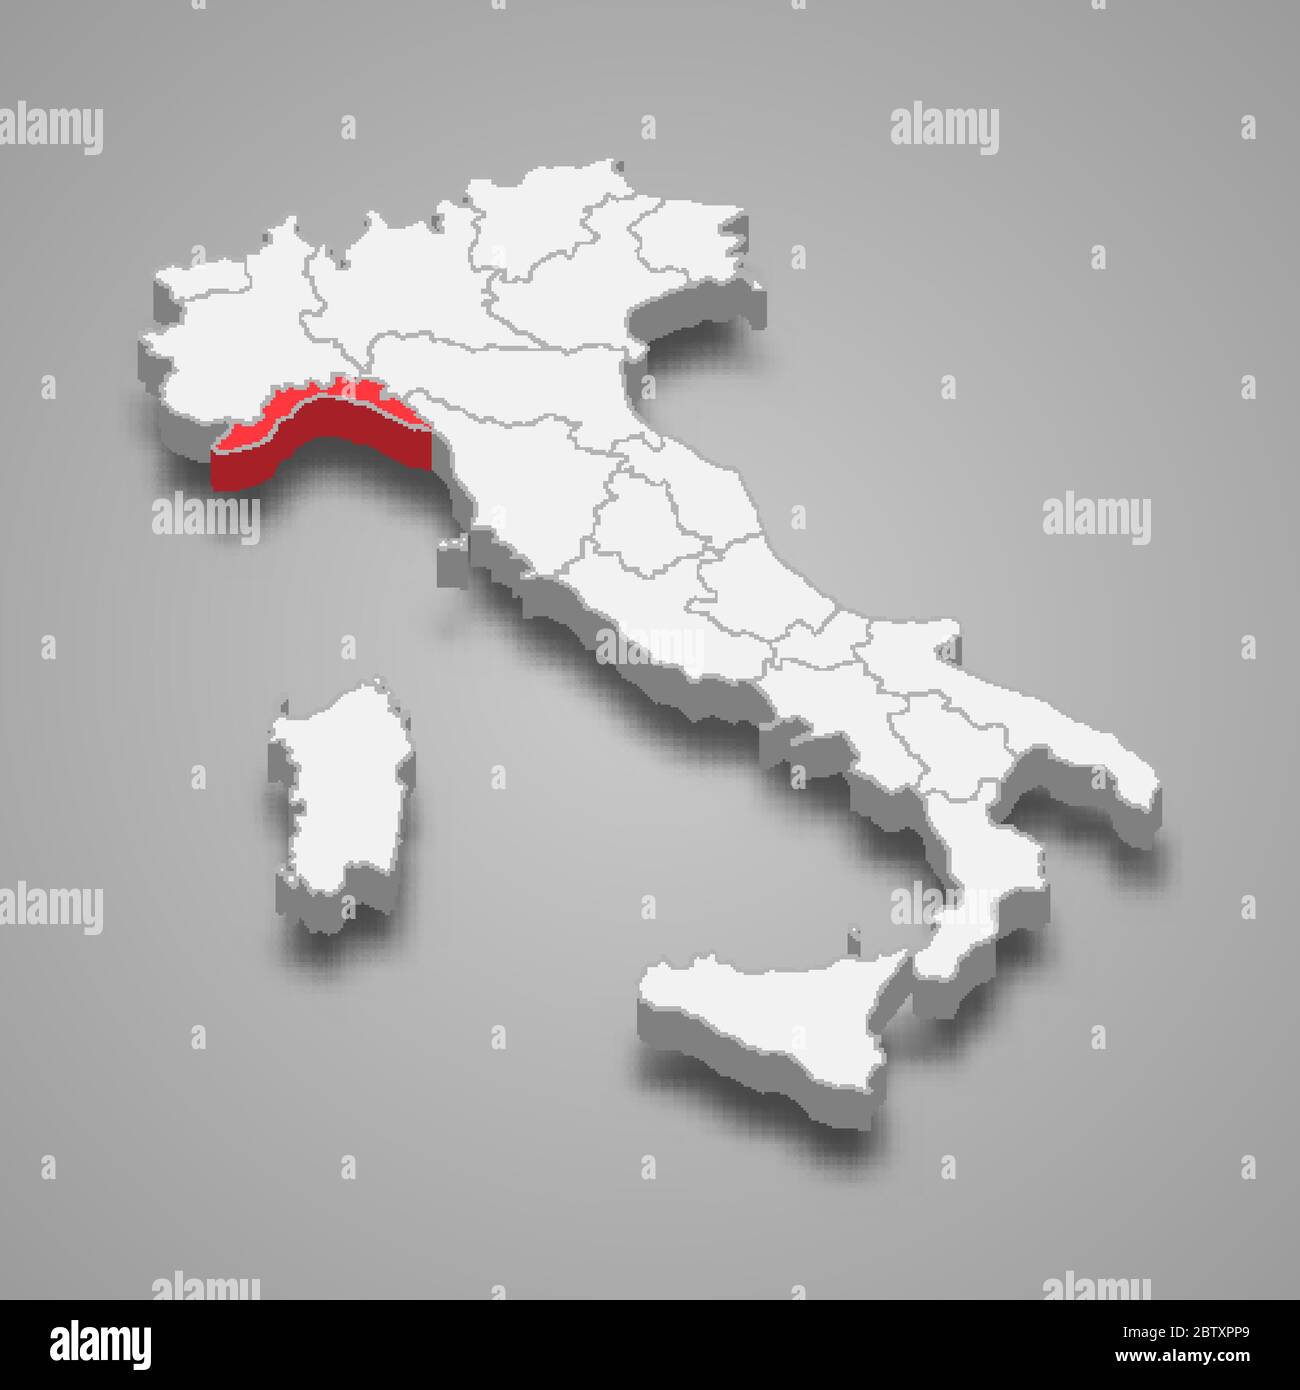 Liguria region location within Italy 3d map Stock Vector